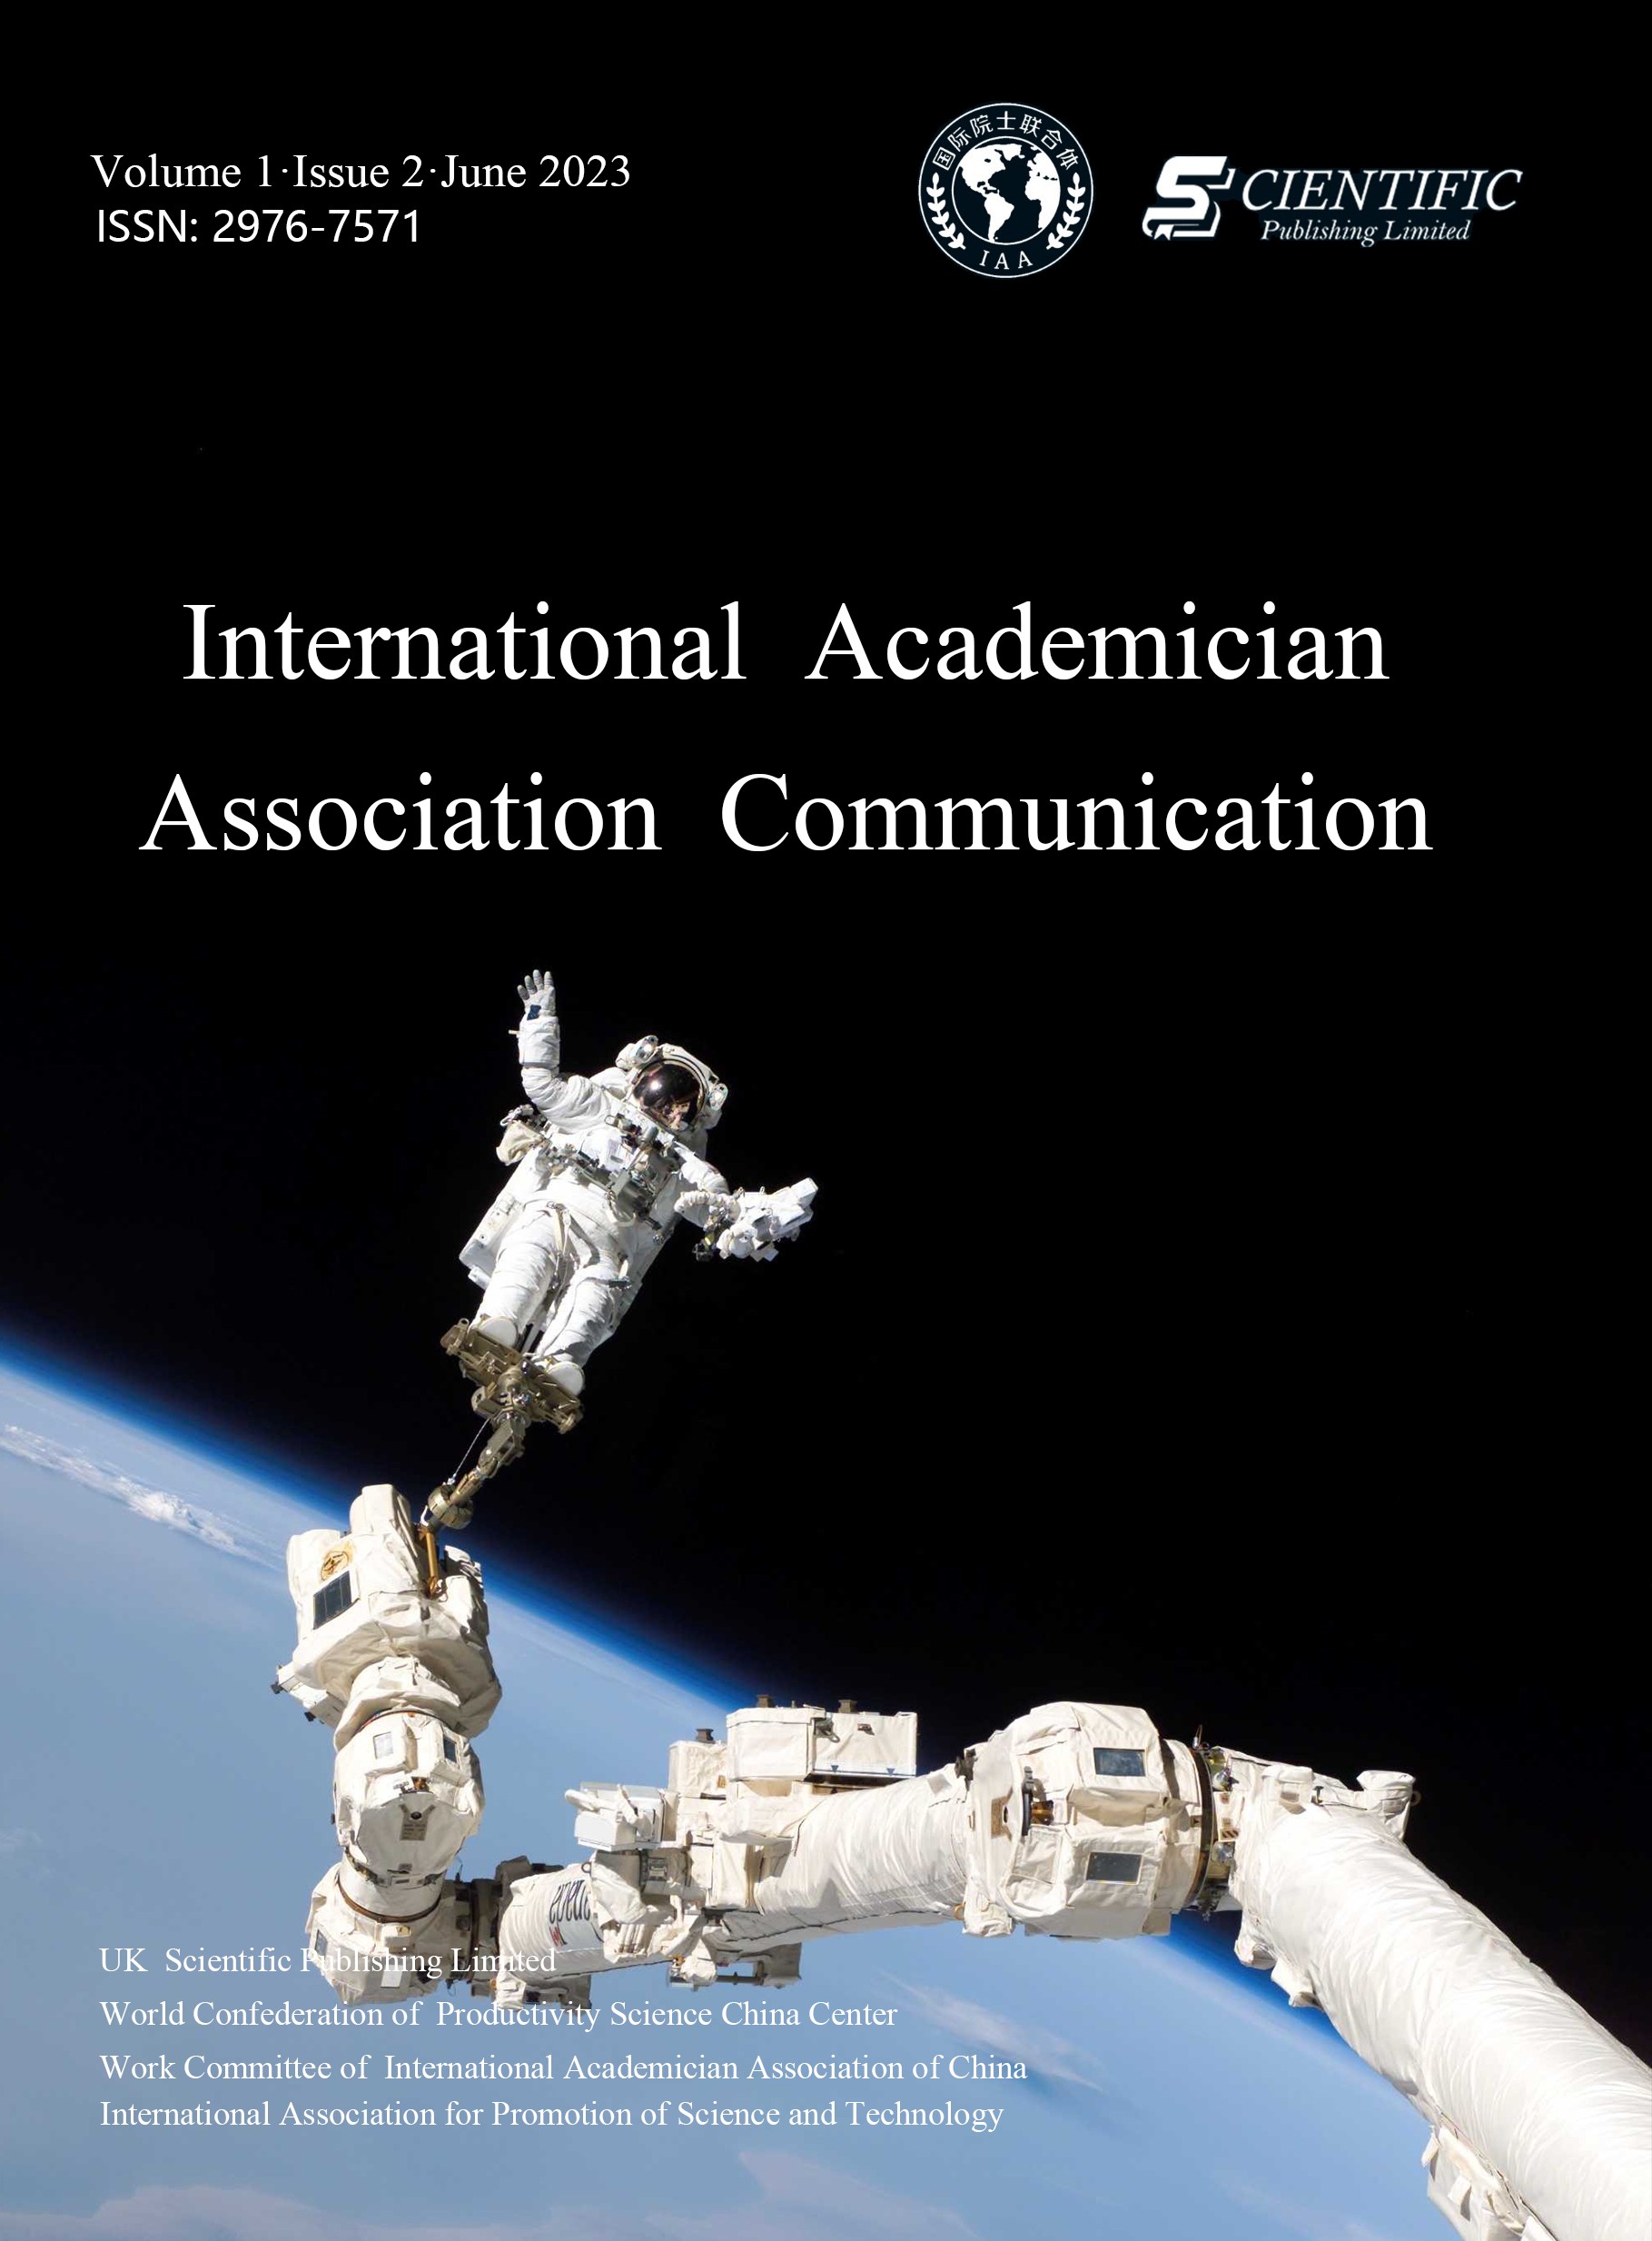                                                 View Volume 1 Issue 2 (2023): International Academician Association Communication
                                        